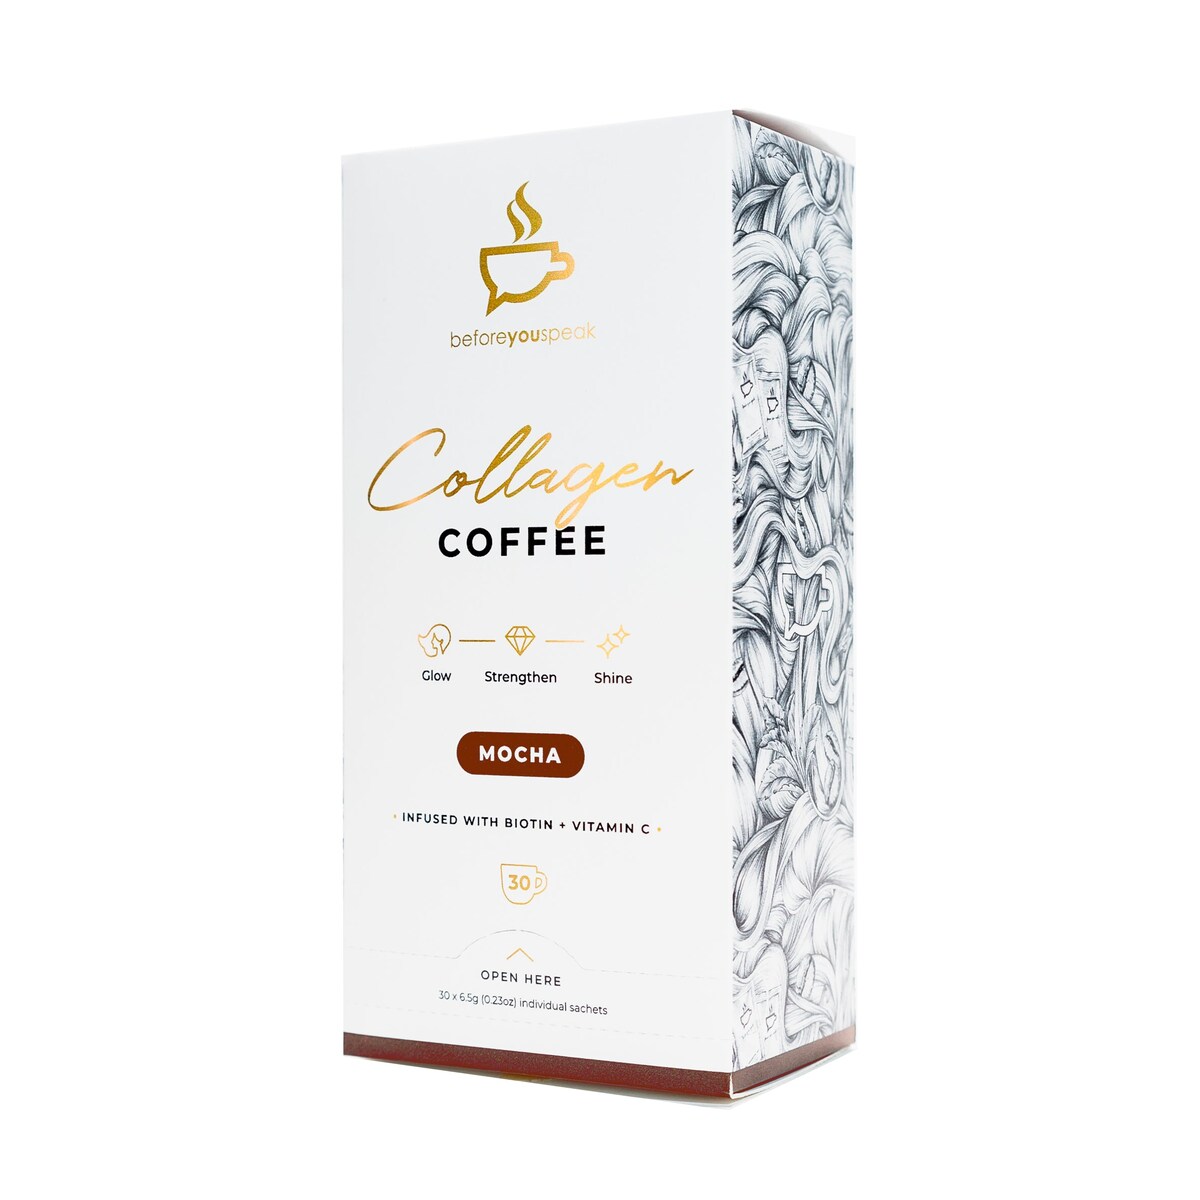 Beforeyouspeak Coffee Collagen Coffee Mocha 30 x 6.5g